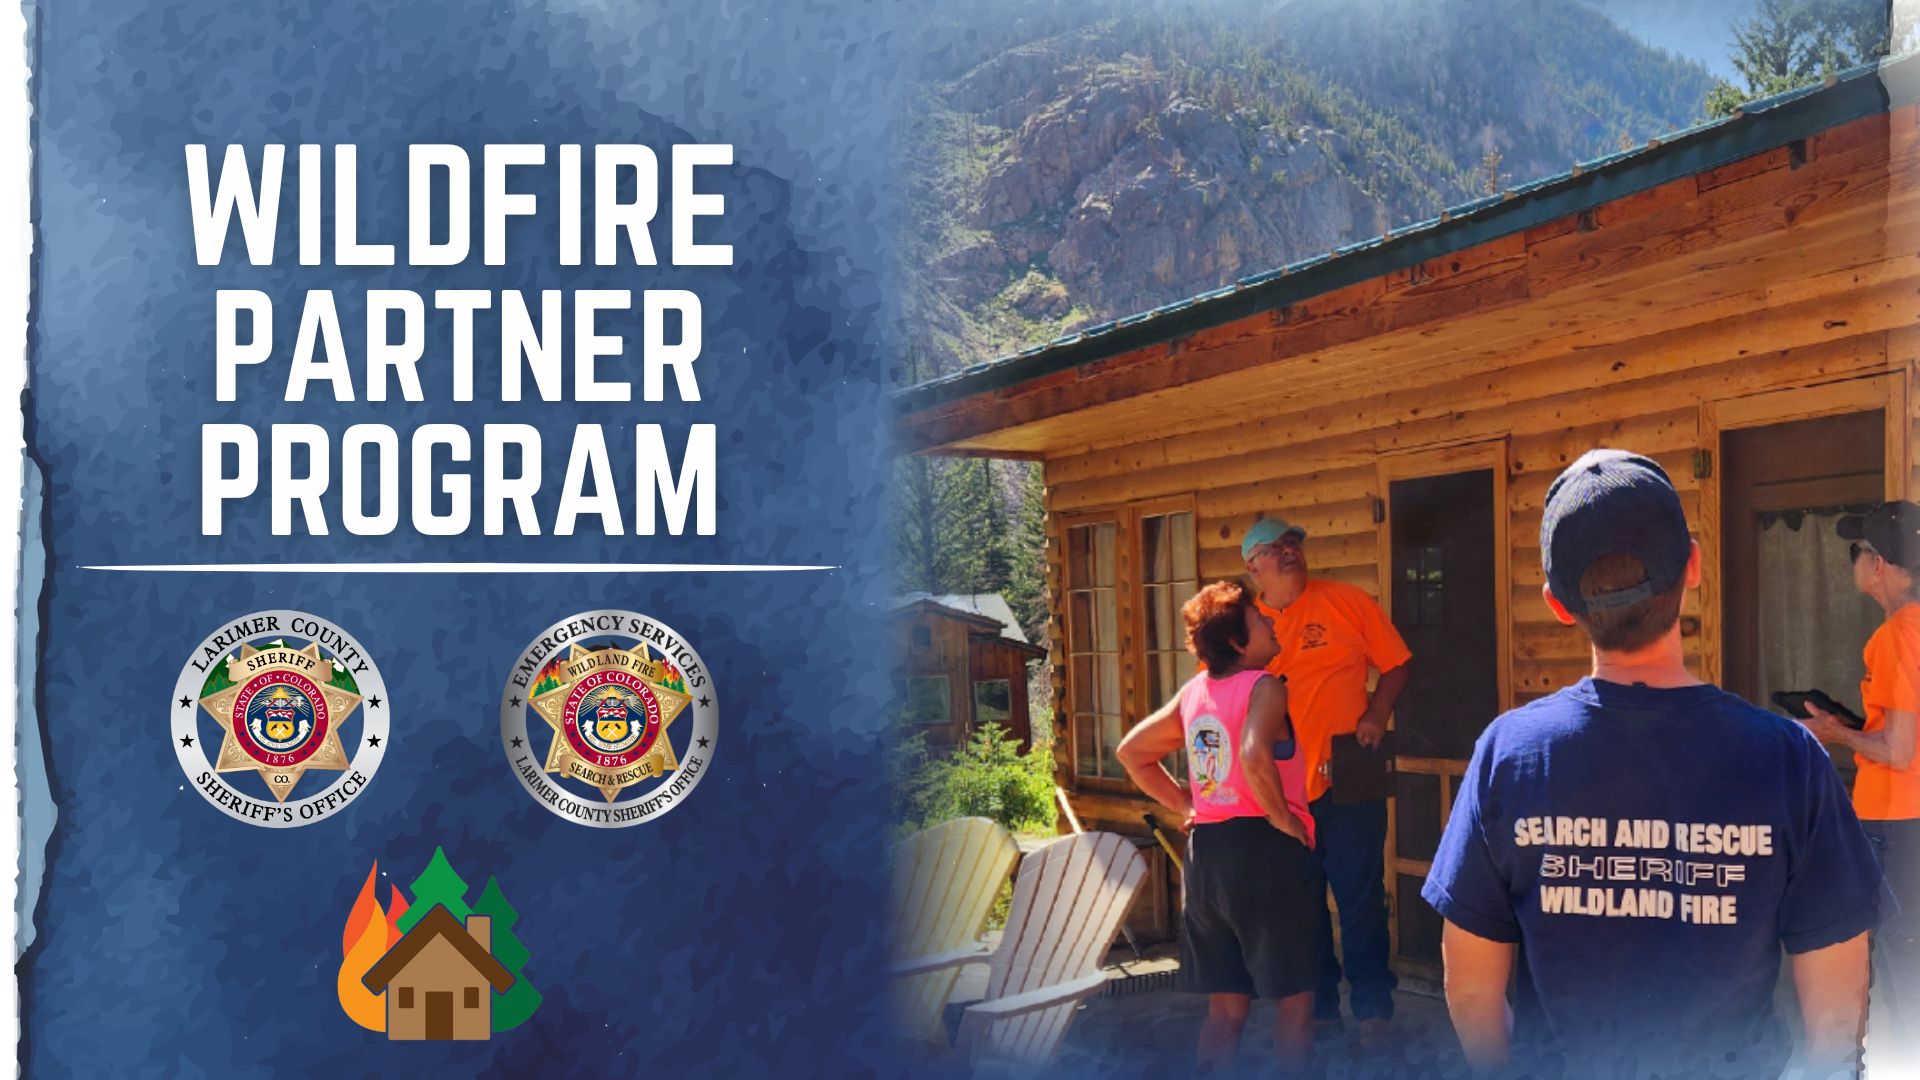 Image 1: Wildfire Partner Program